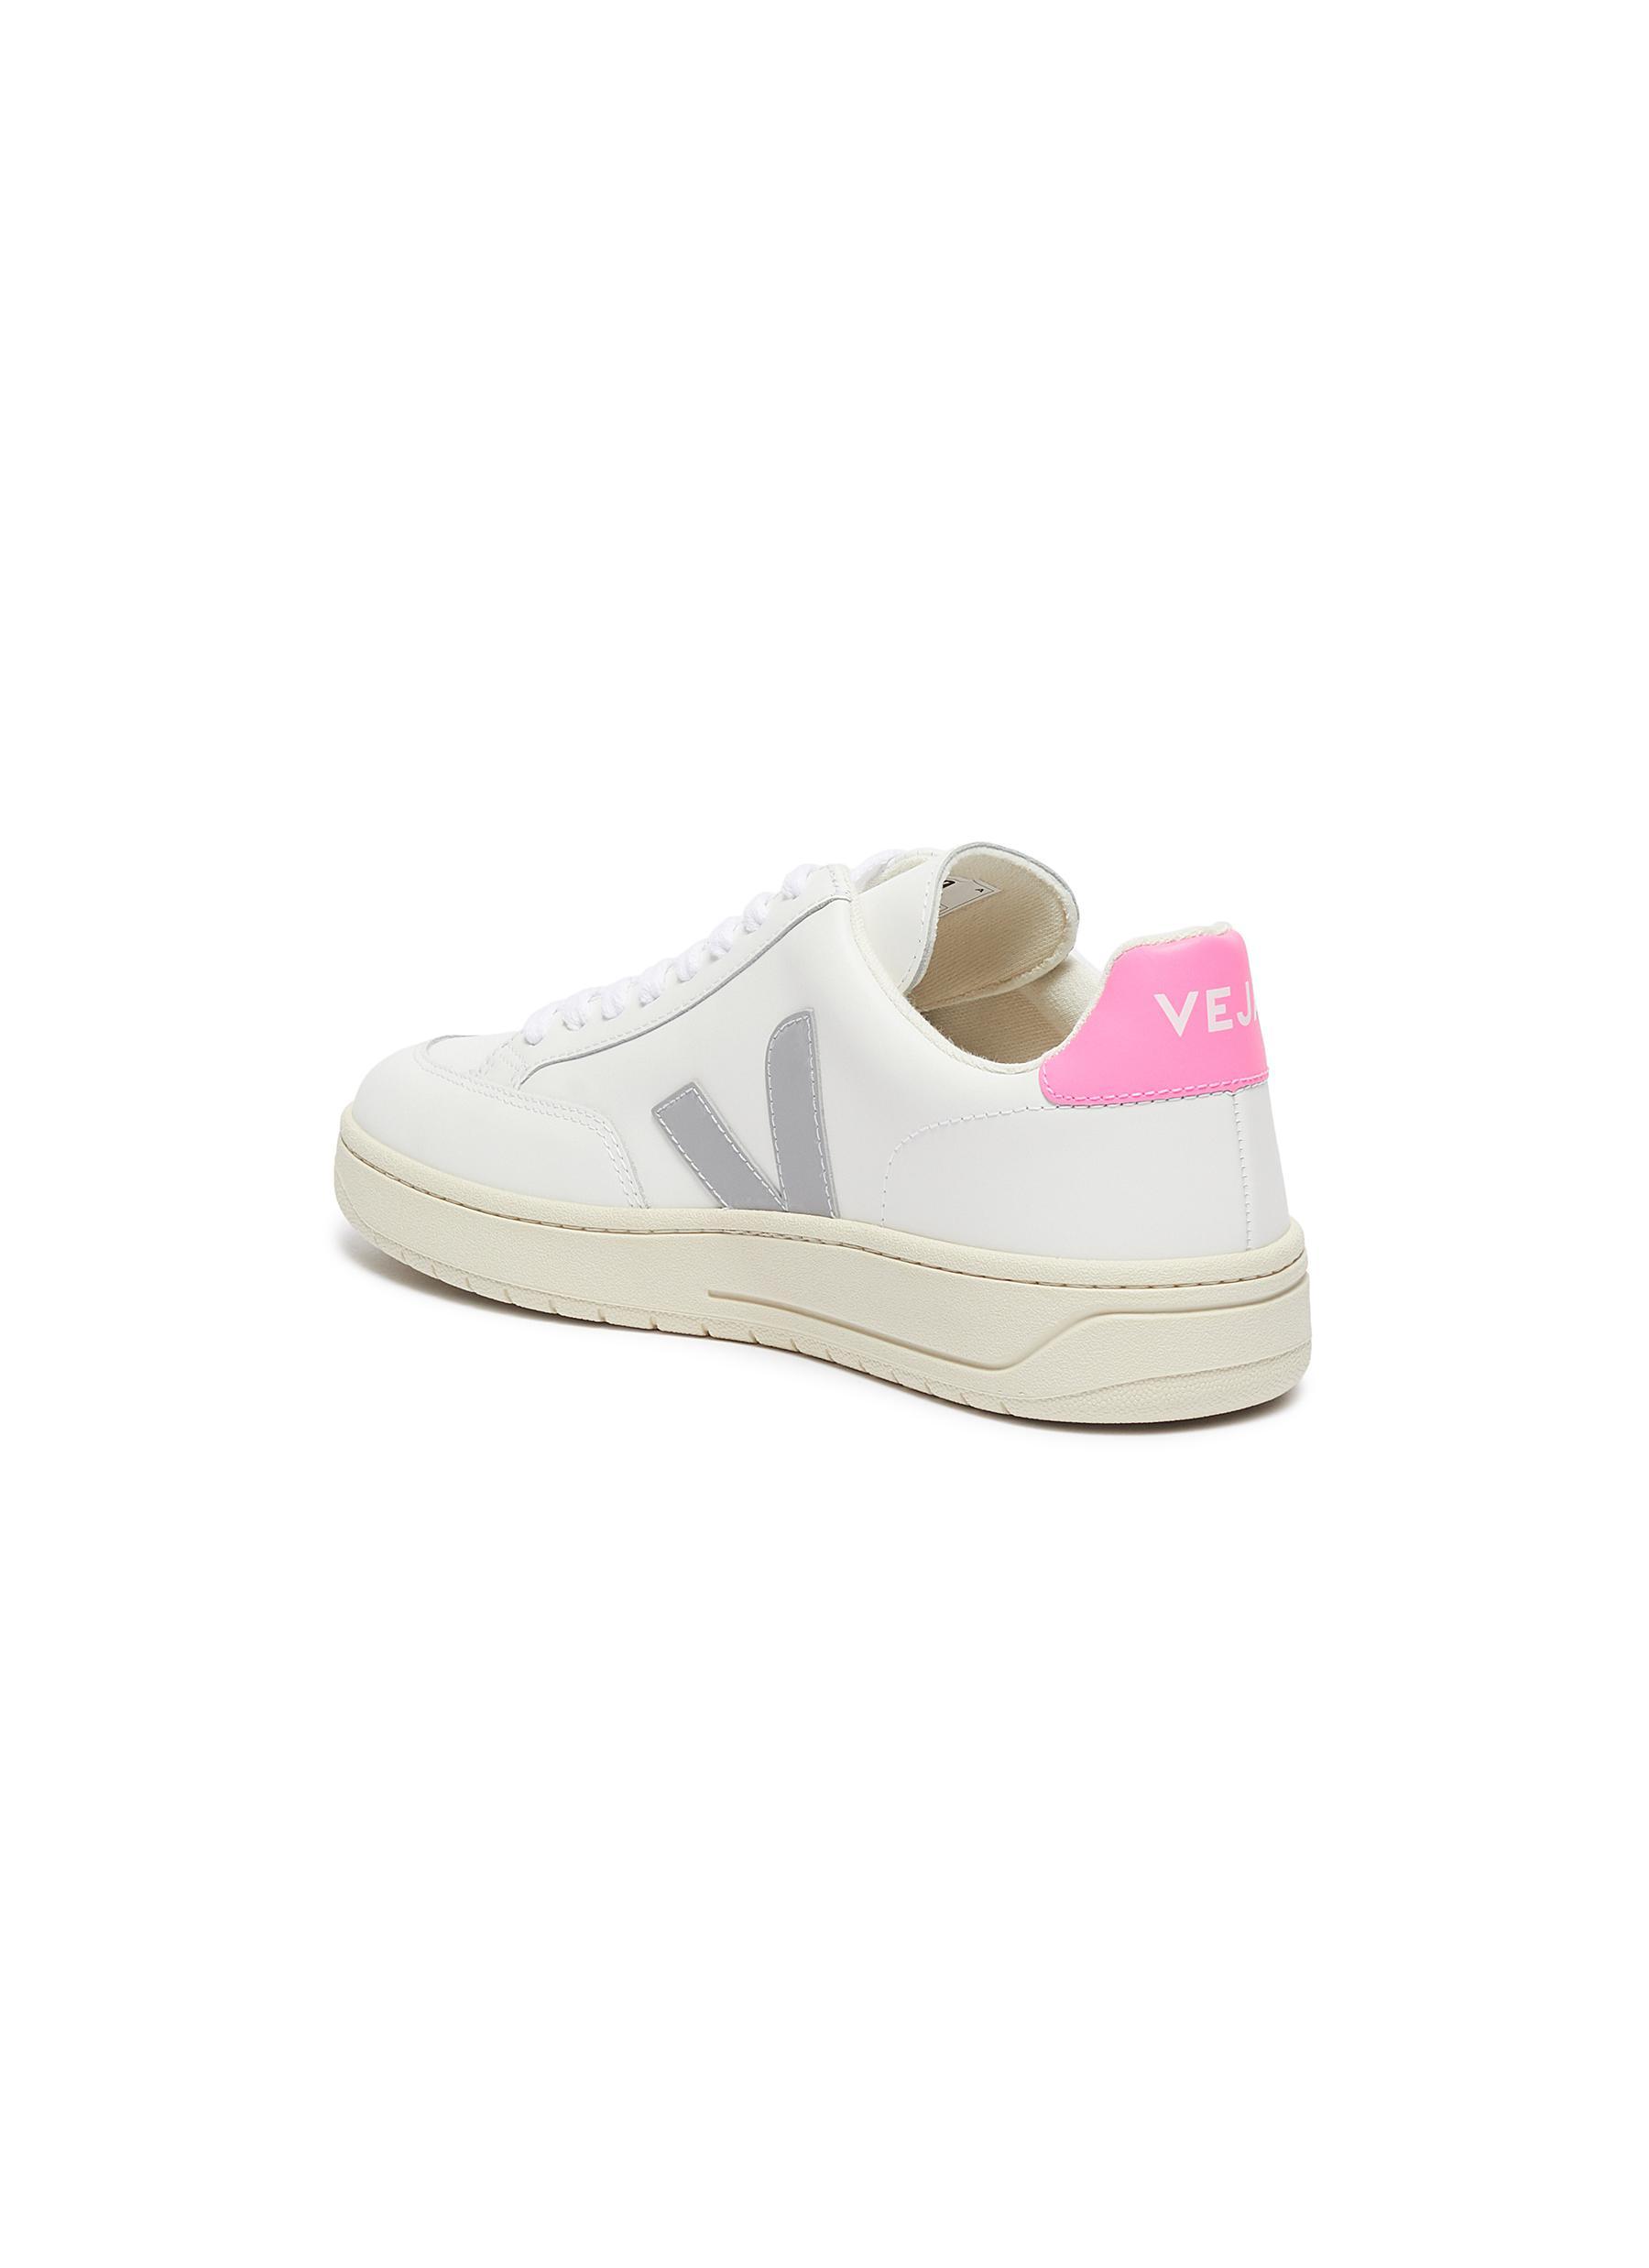 Veja 'v-12' Leather Sneakers in White | Lyst